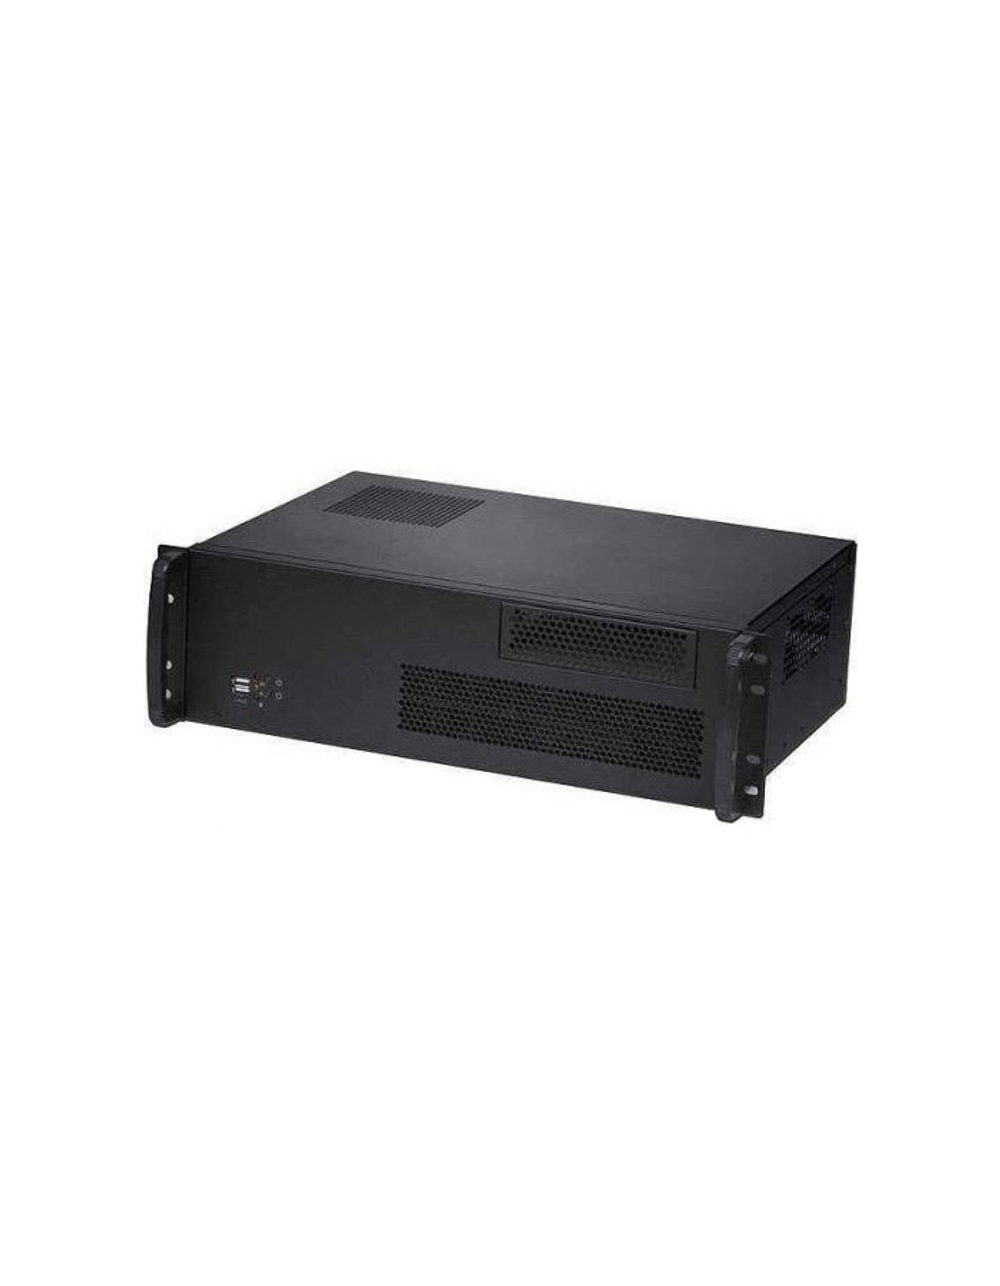 Procase Корпус 3U rear/front-access server case, черный, без блока питания, глубина 300мм, MB 12"x9.6" [RU330-B-0]